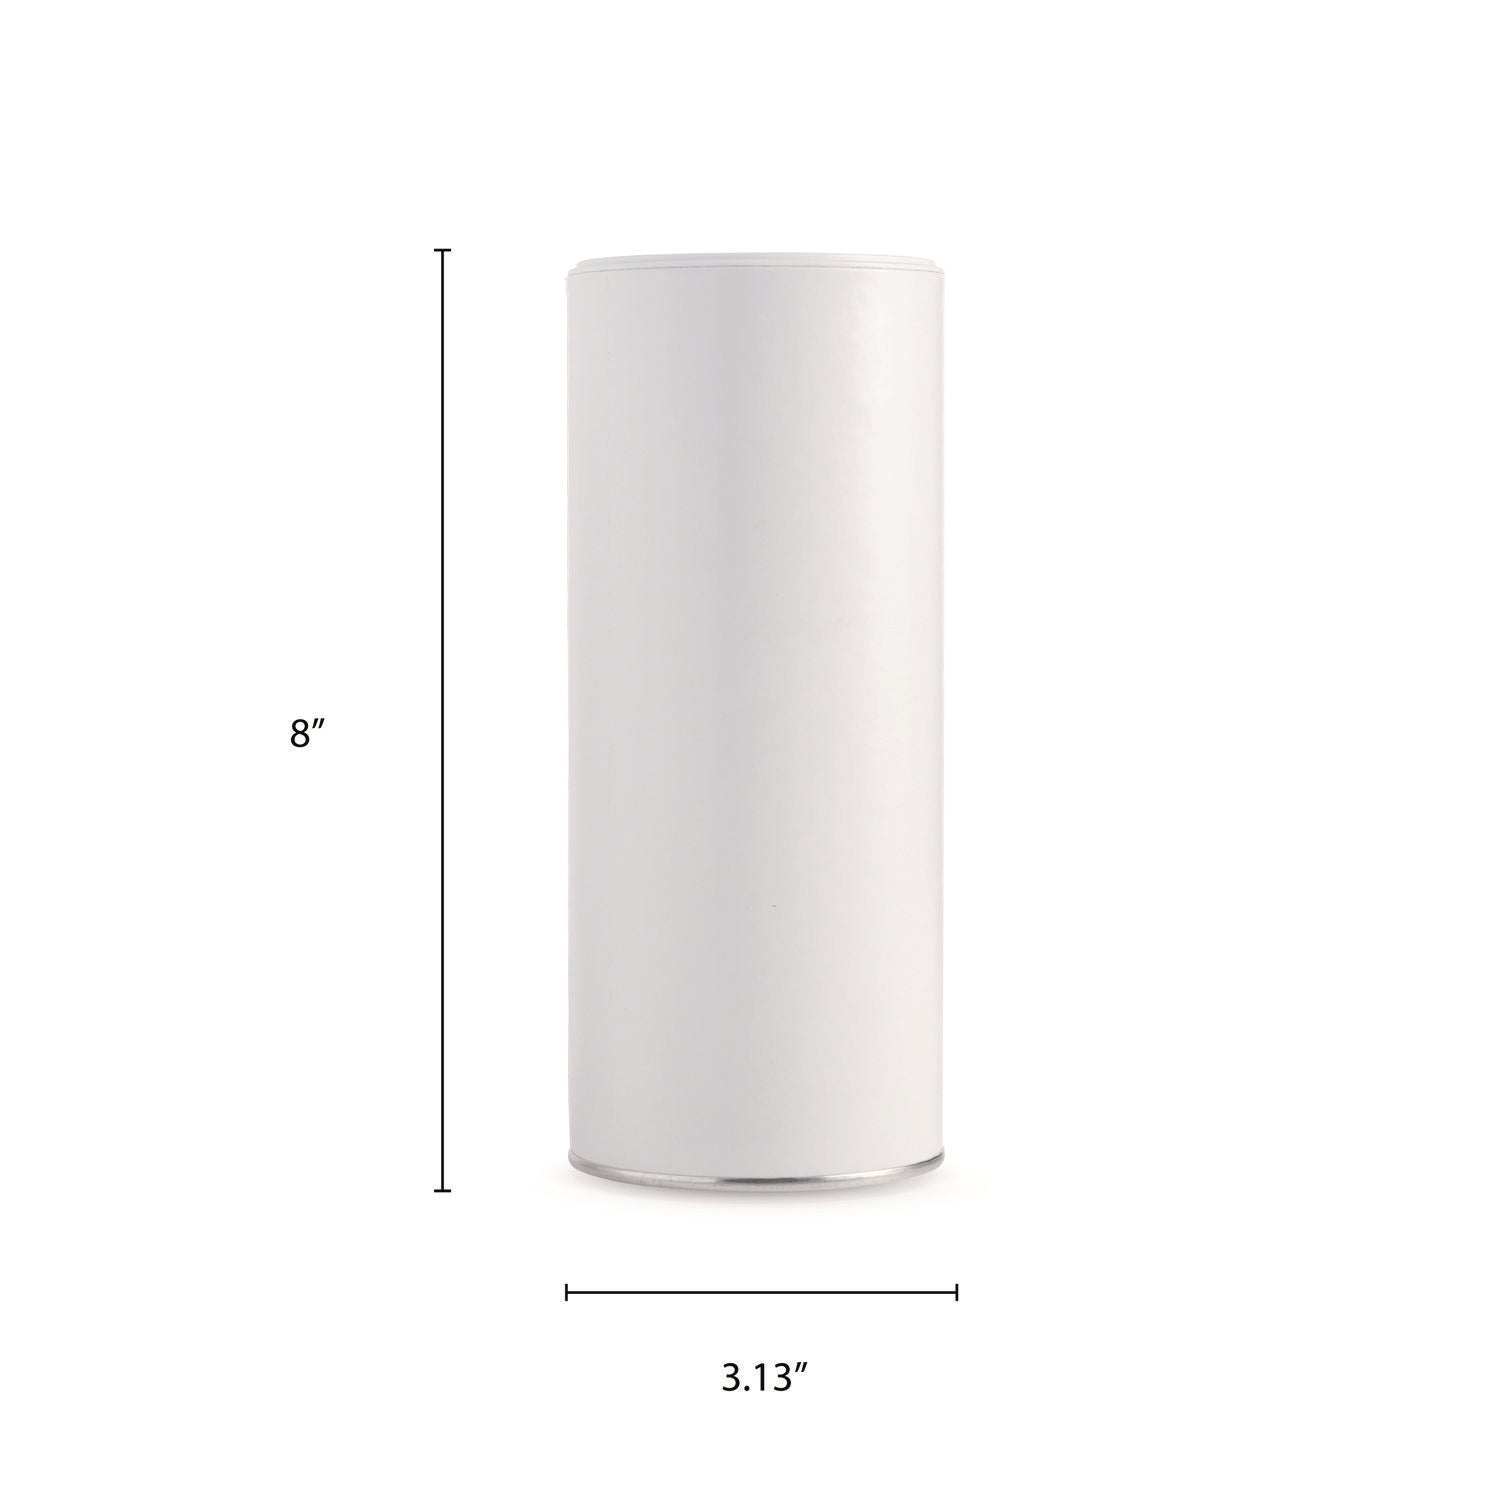 Super-Sorb Liquid Spill Absorbent, Lemon Scent, 720 oz Absorbing Volume, 12 oz Shaker Can, 6/Box - 4